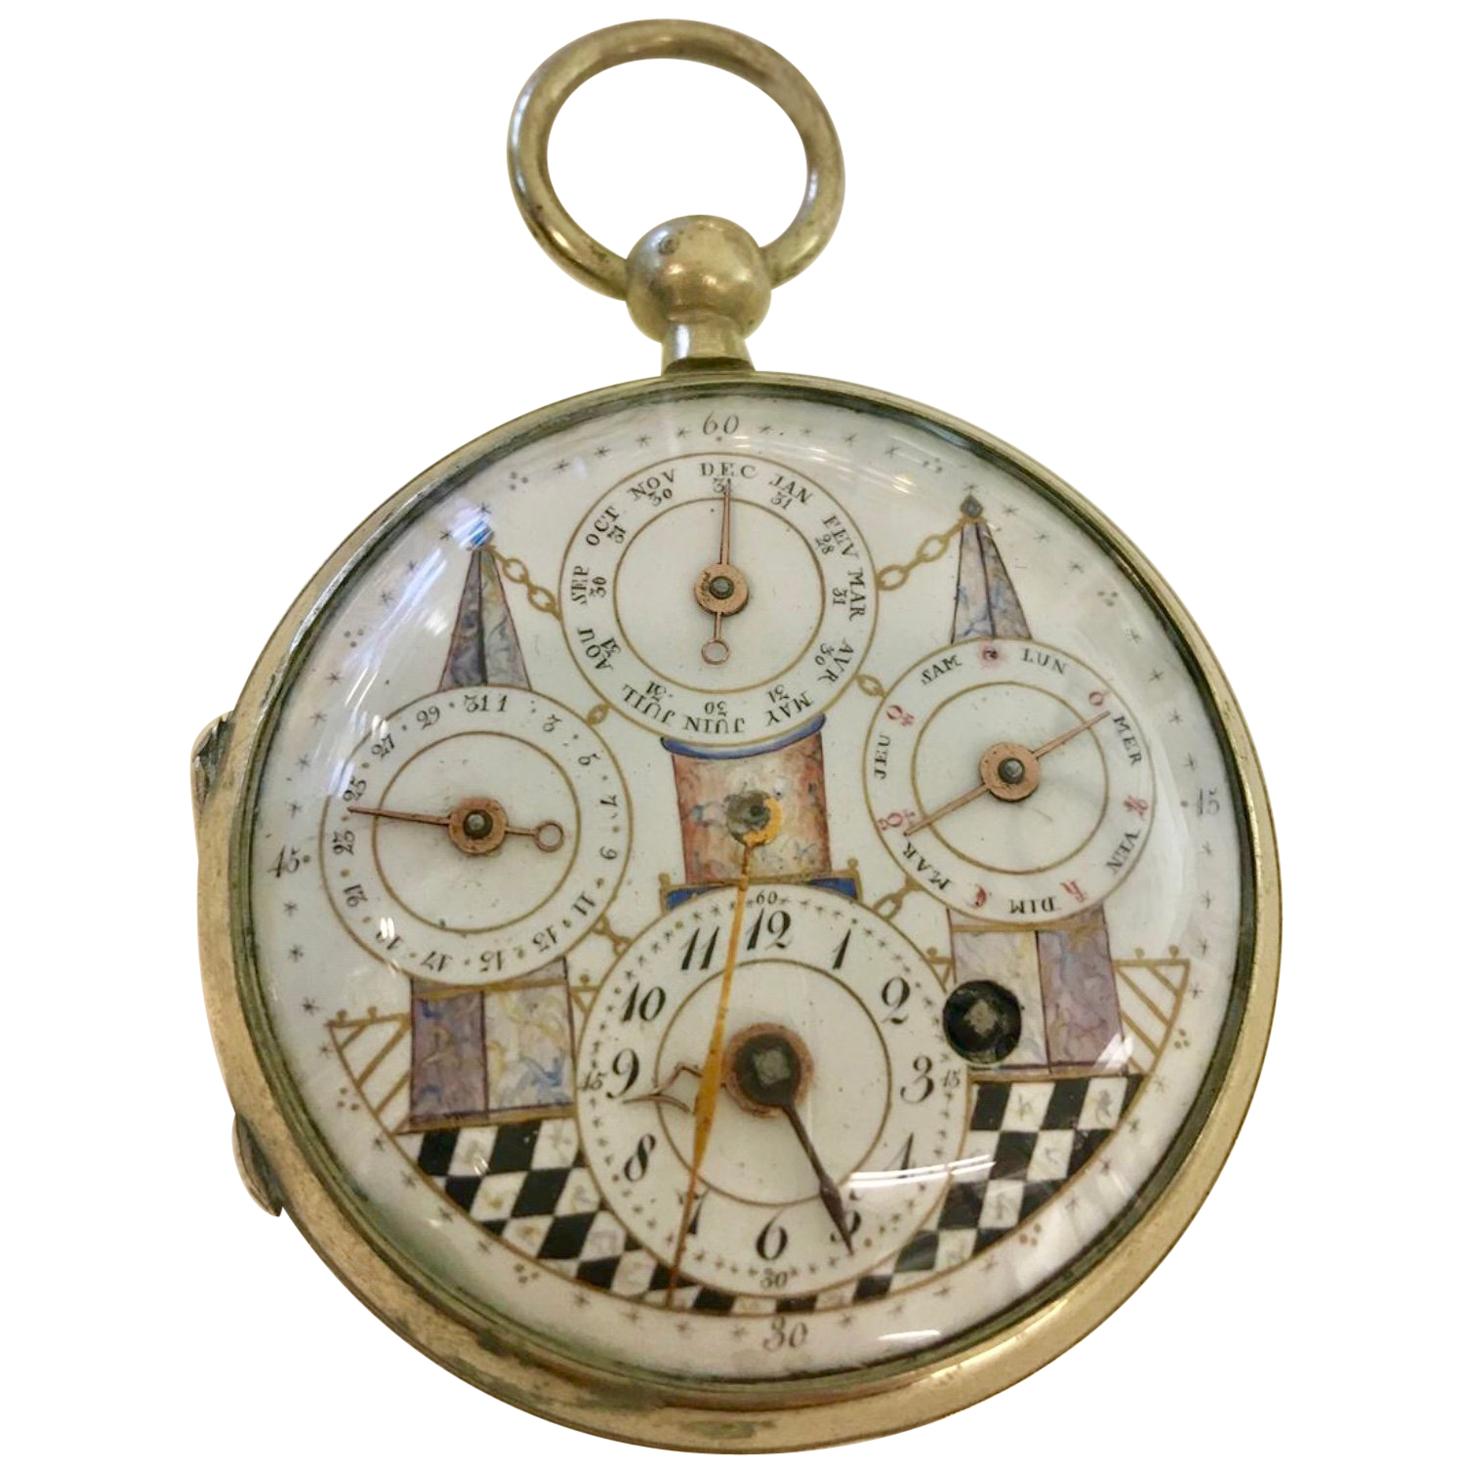 Masonic Calendar Key Winding Pocket Watch with Fusee Movement